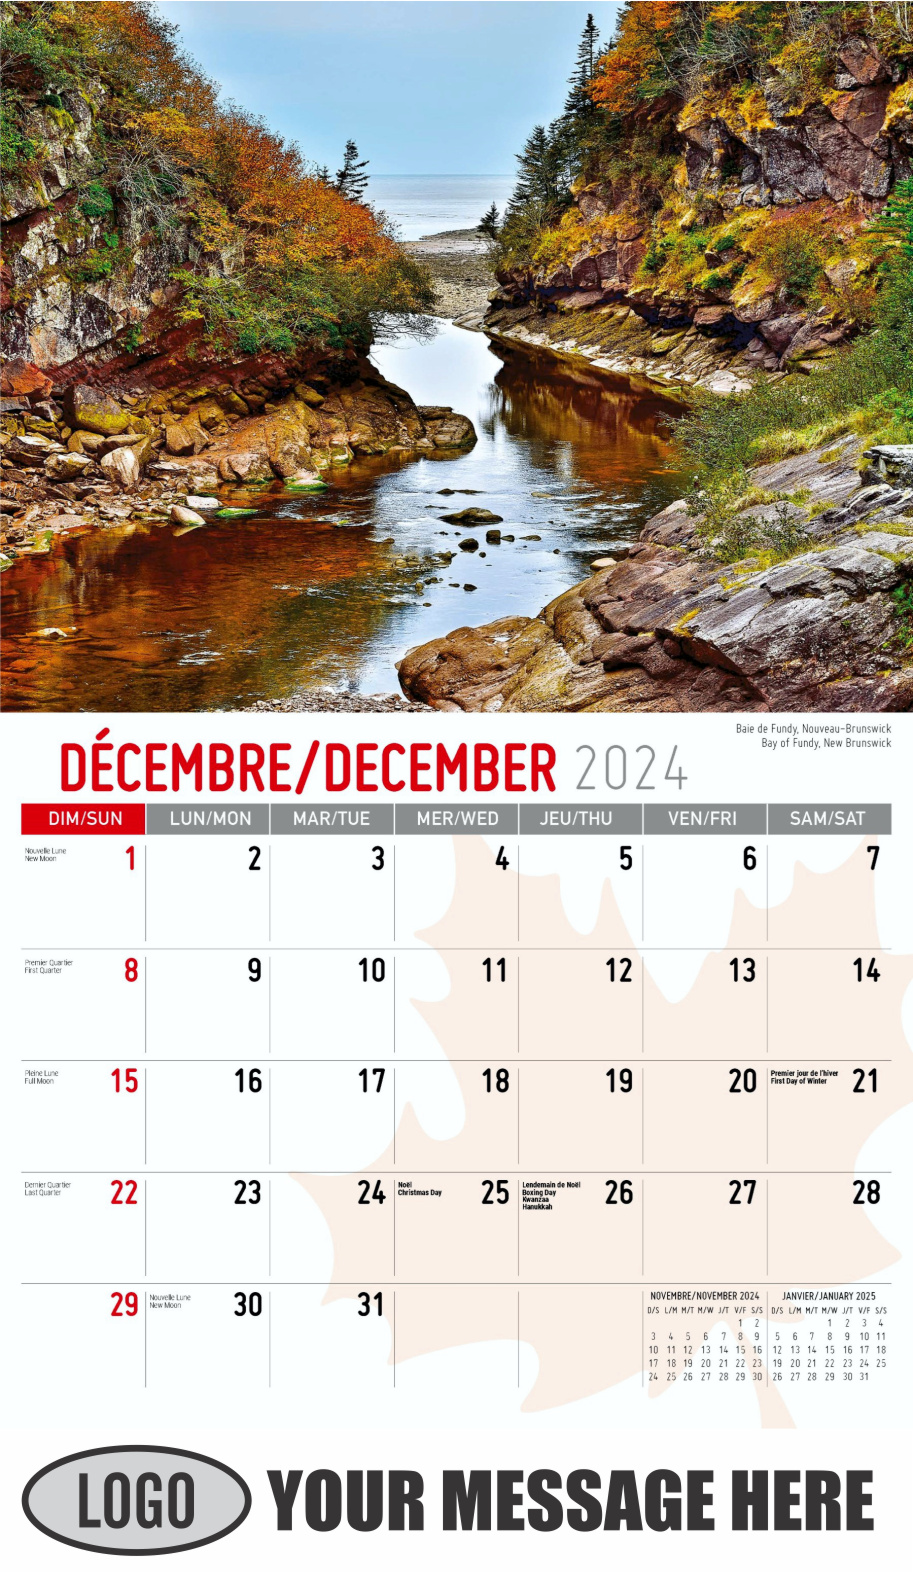 Scenes of Canada 2024 Bilingual Business Advertising Calendar - December